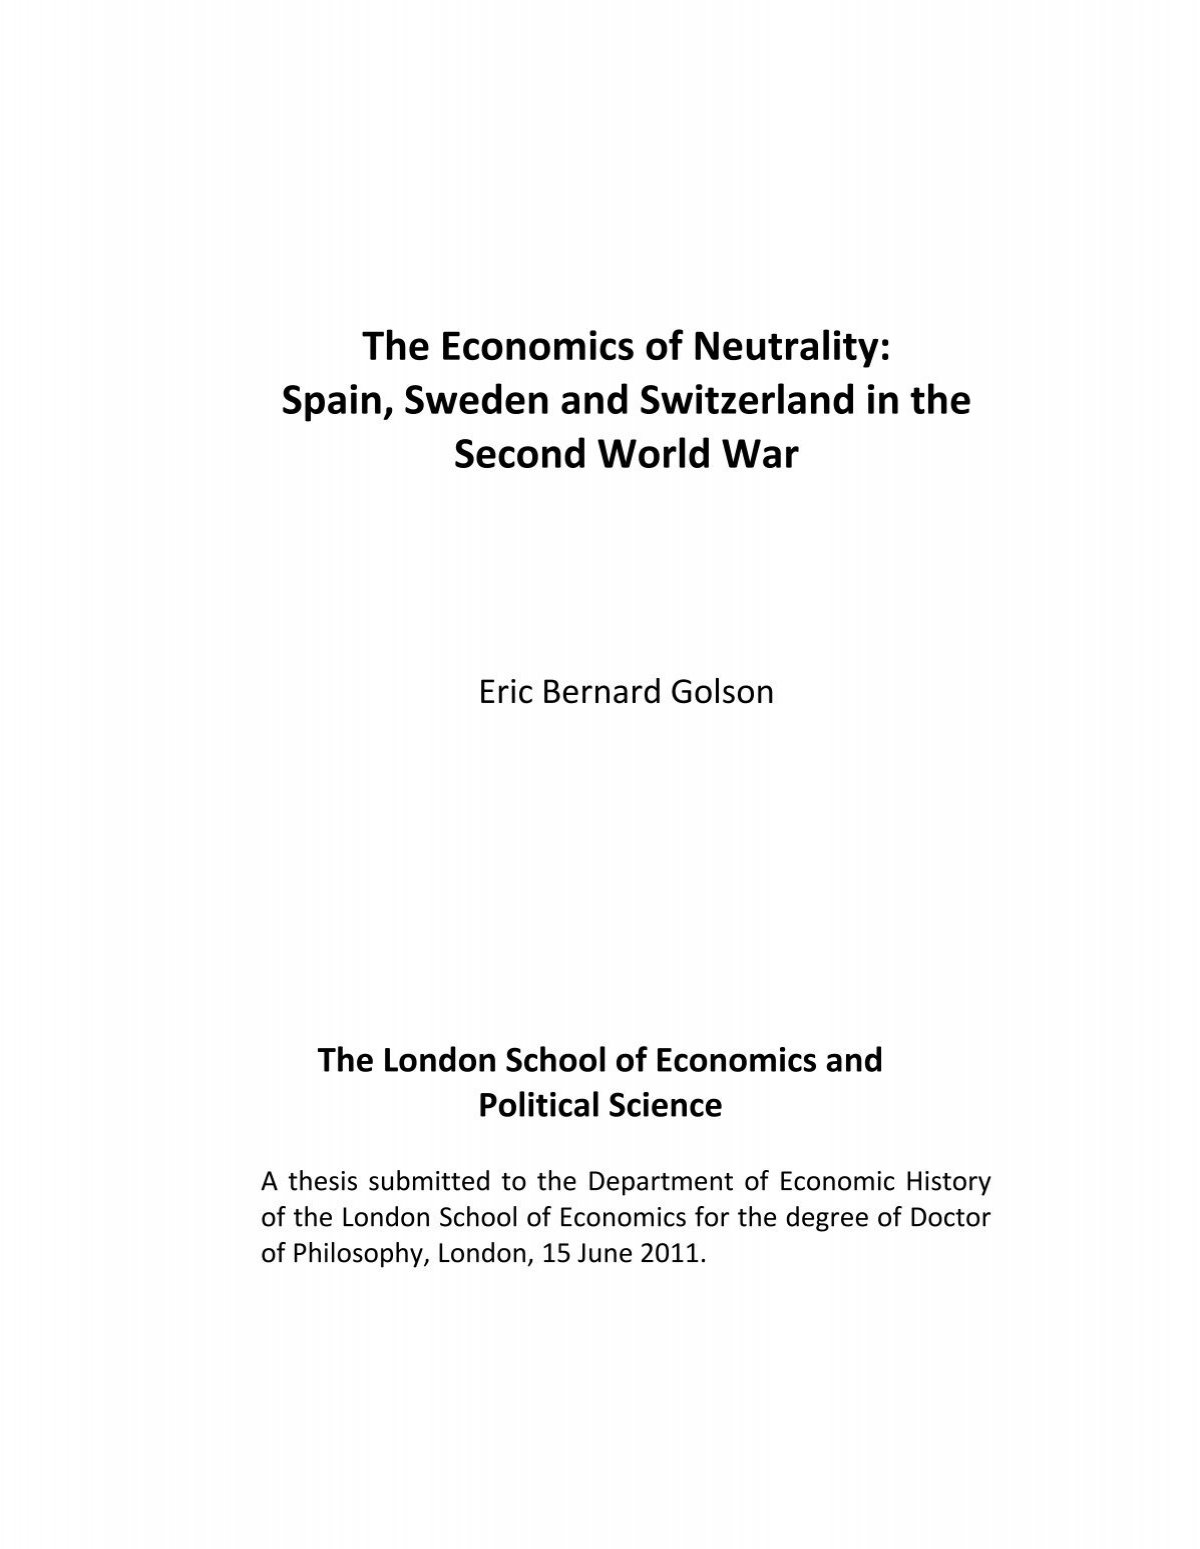 The Economics of Neutrality - LSE Theses Online - London School 